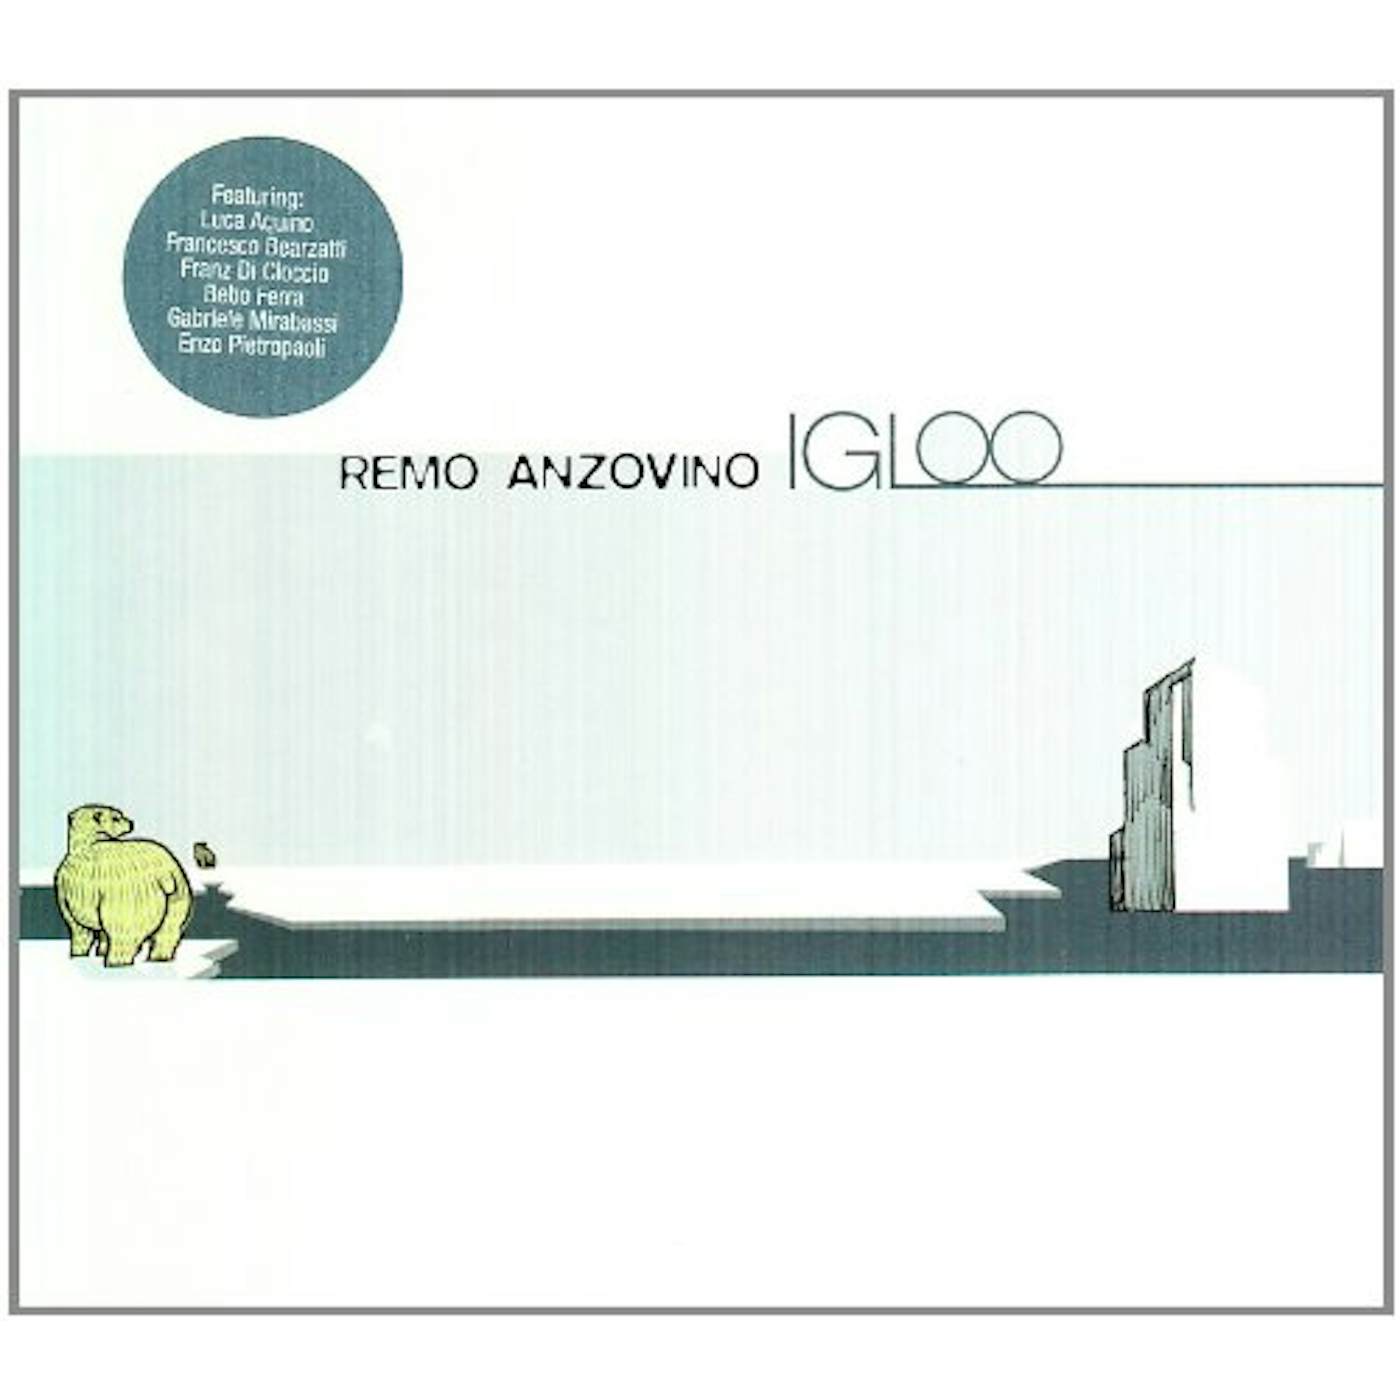 Remo Anzovino IGLOO CD